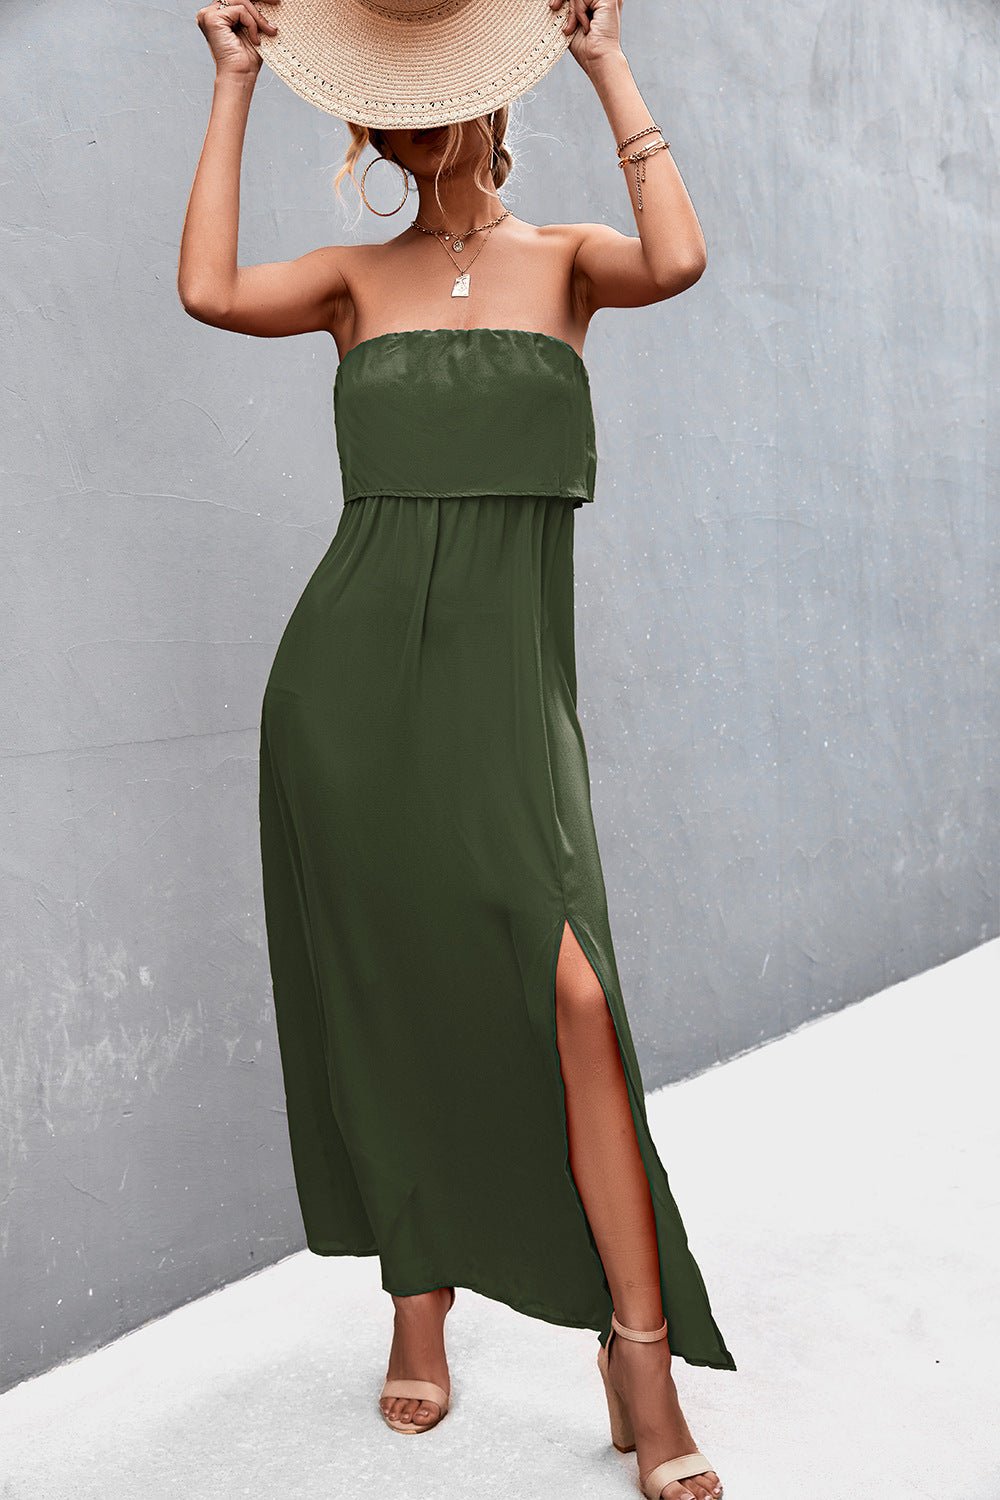 Strapless Split Maxi Dress - Fashion Girl Online Store